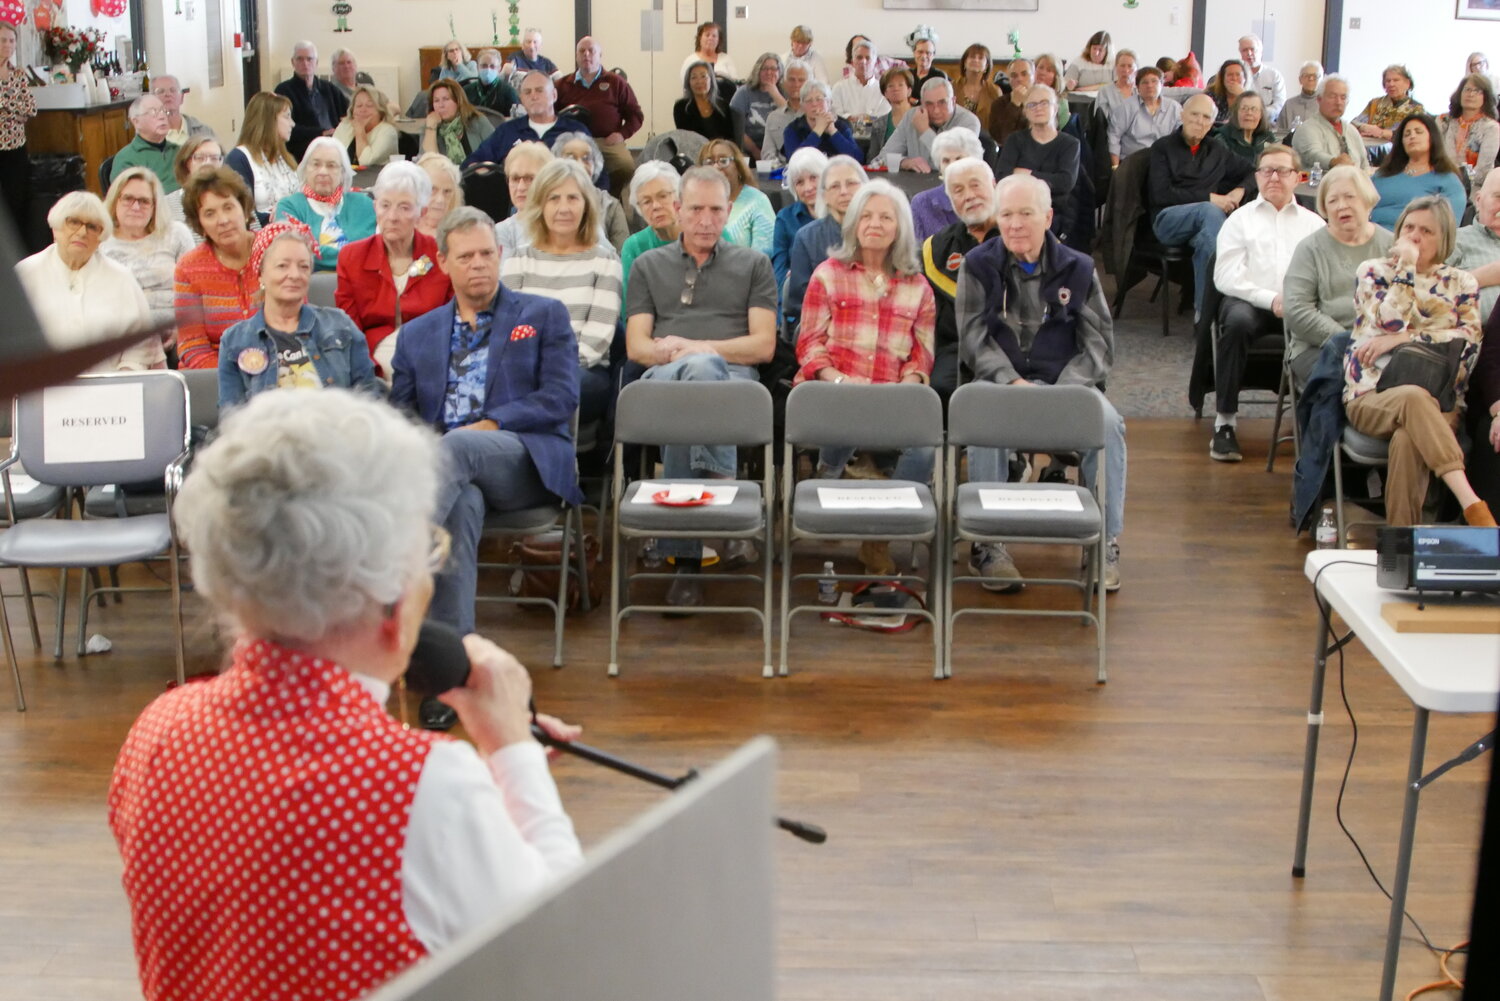 The crowd of 120 gathered at Central Bucks Senior Center in Doylestown listens as Mae Krier speaks.